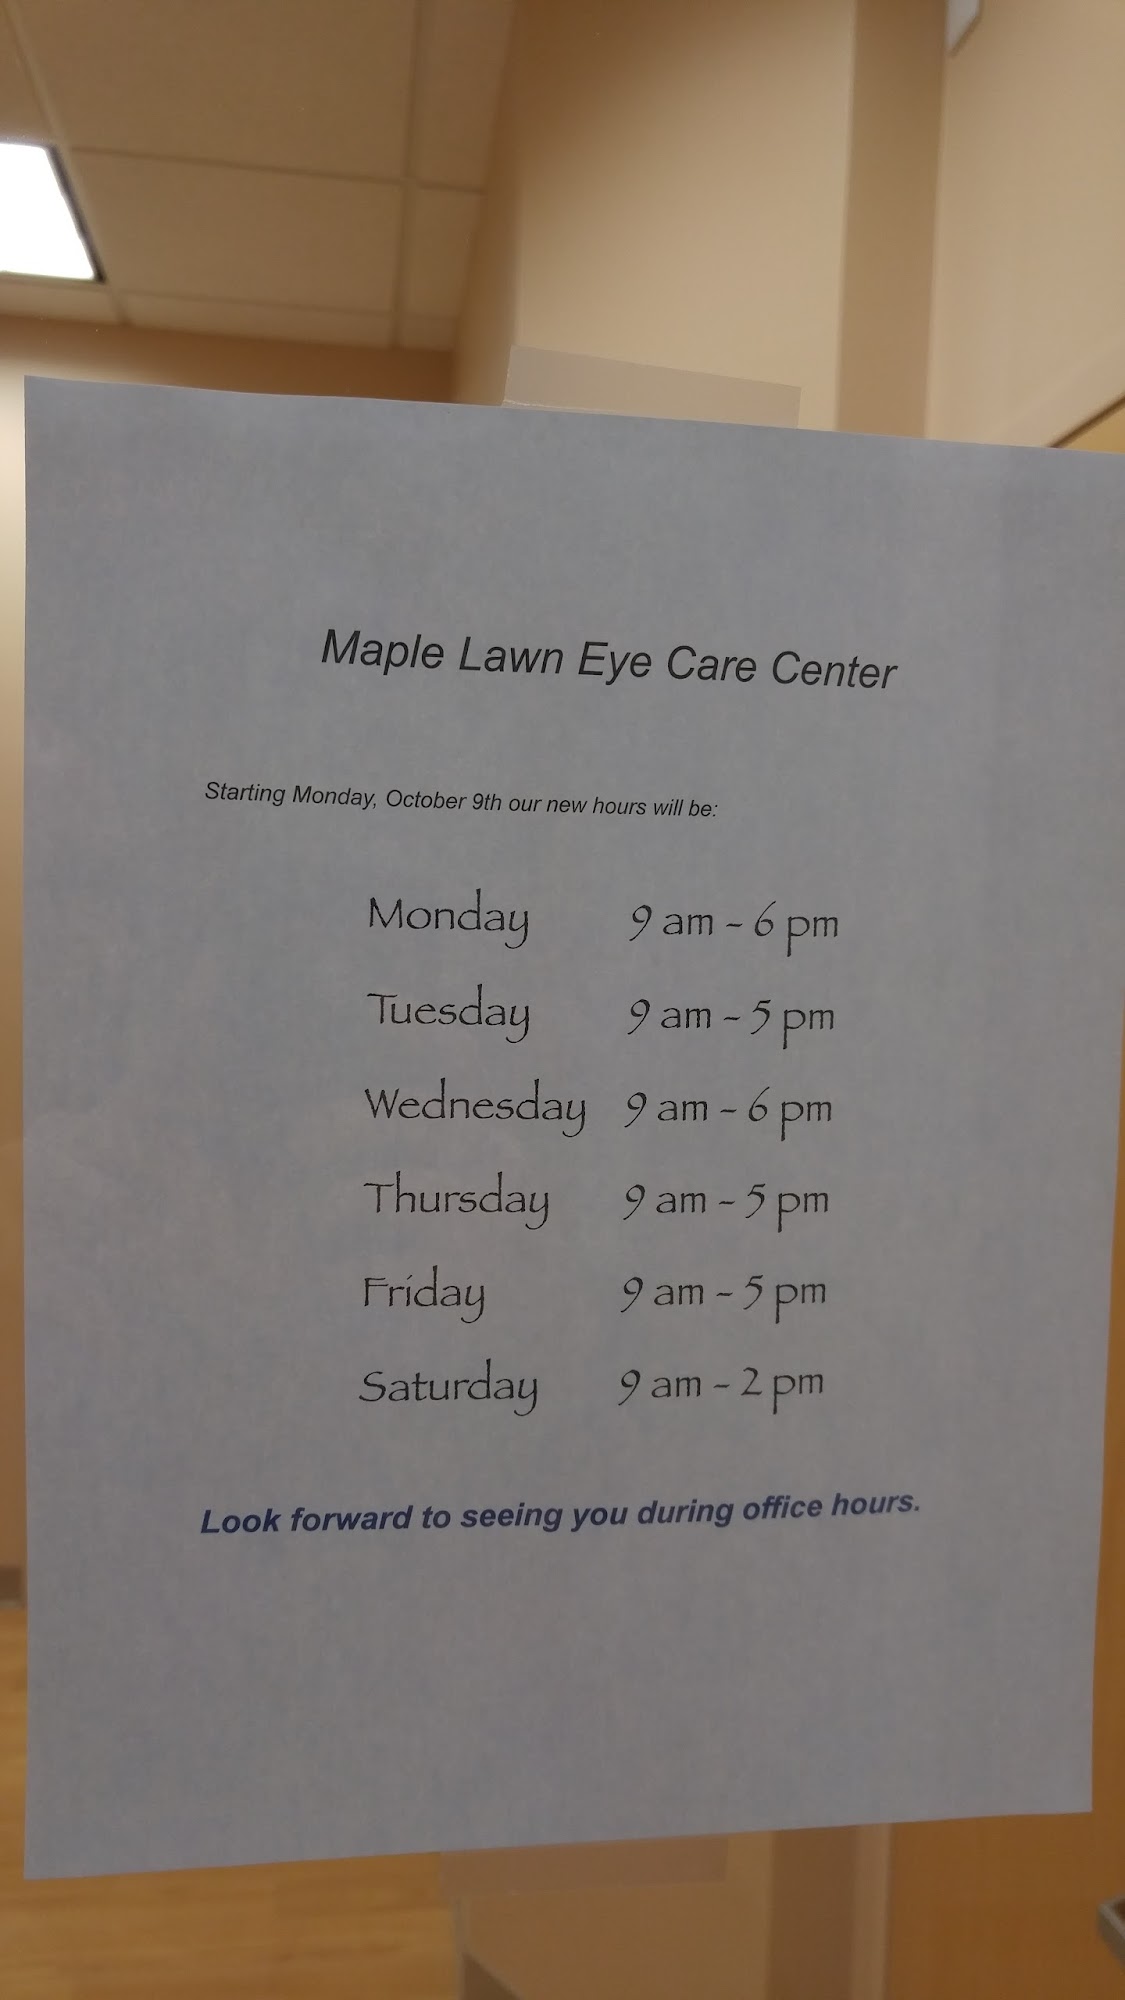 Maple Lawn Eye Care Center